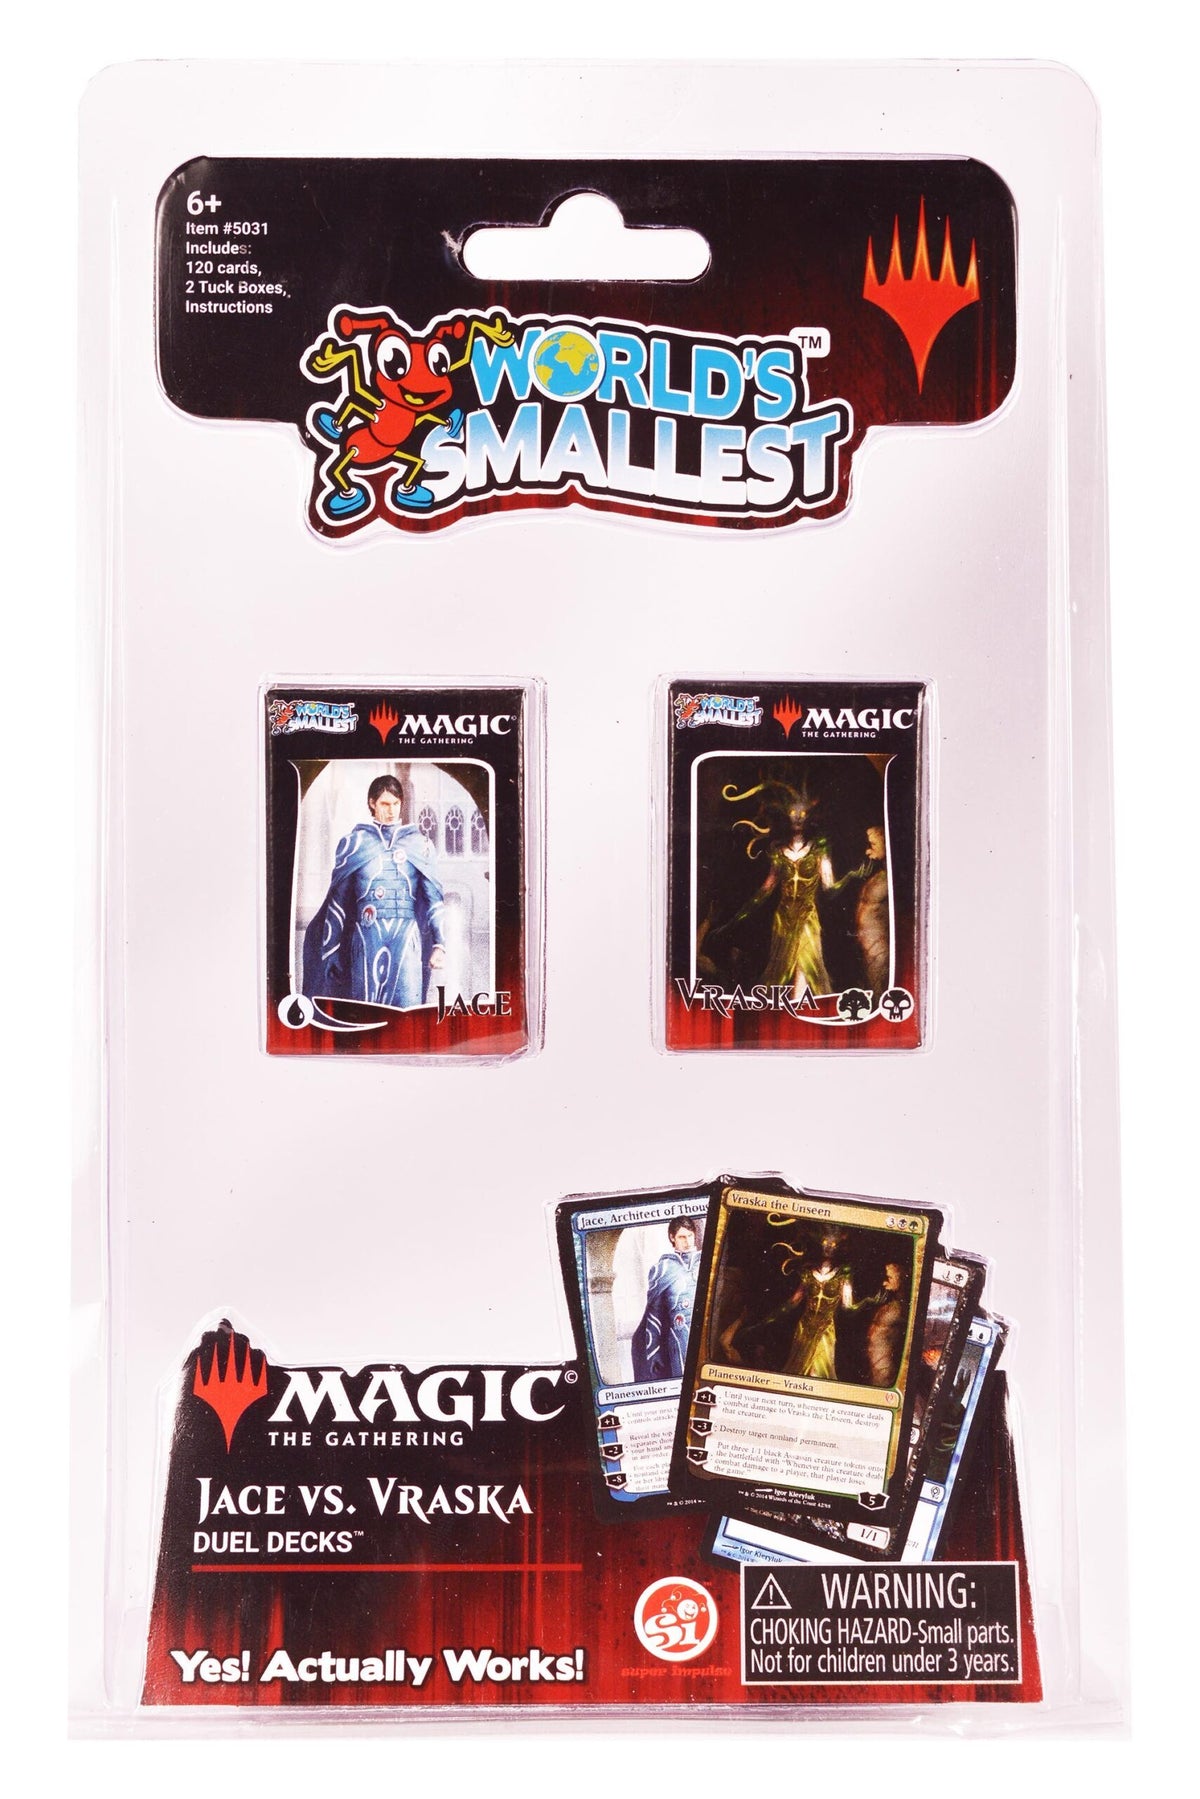 World's Smallest Magic the Gathering Jace Vs. Vraska Duel Decks - Zlc Collectibles